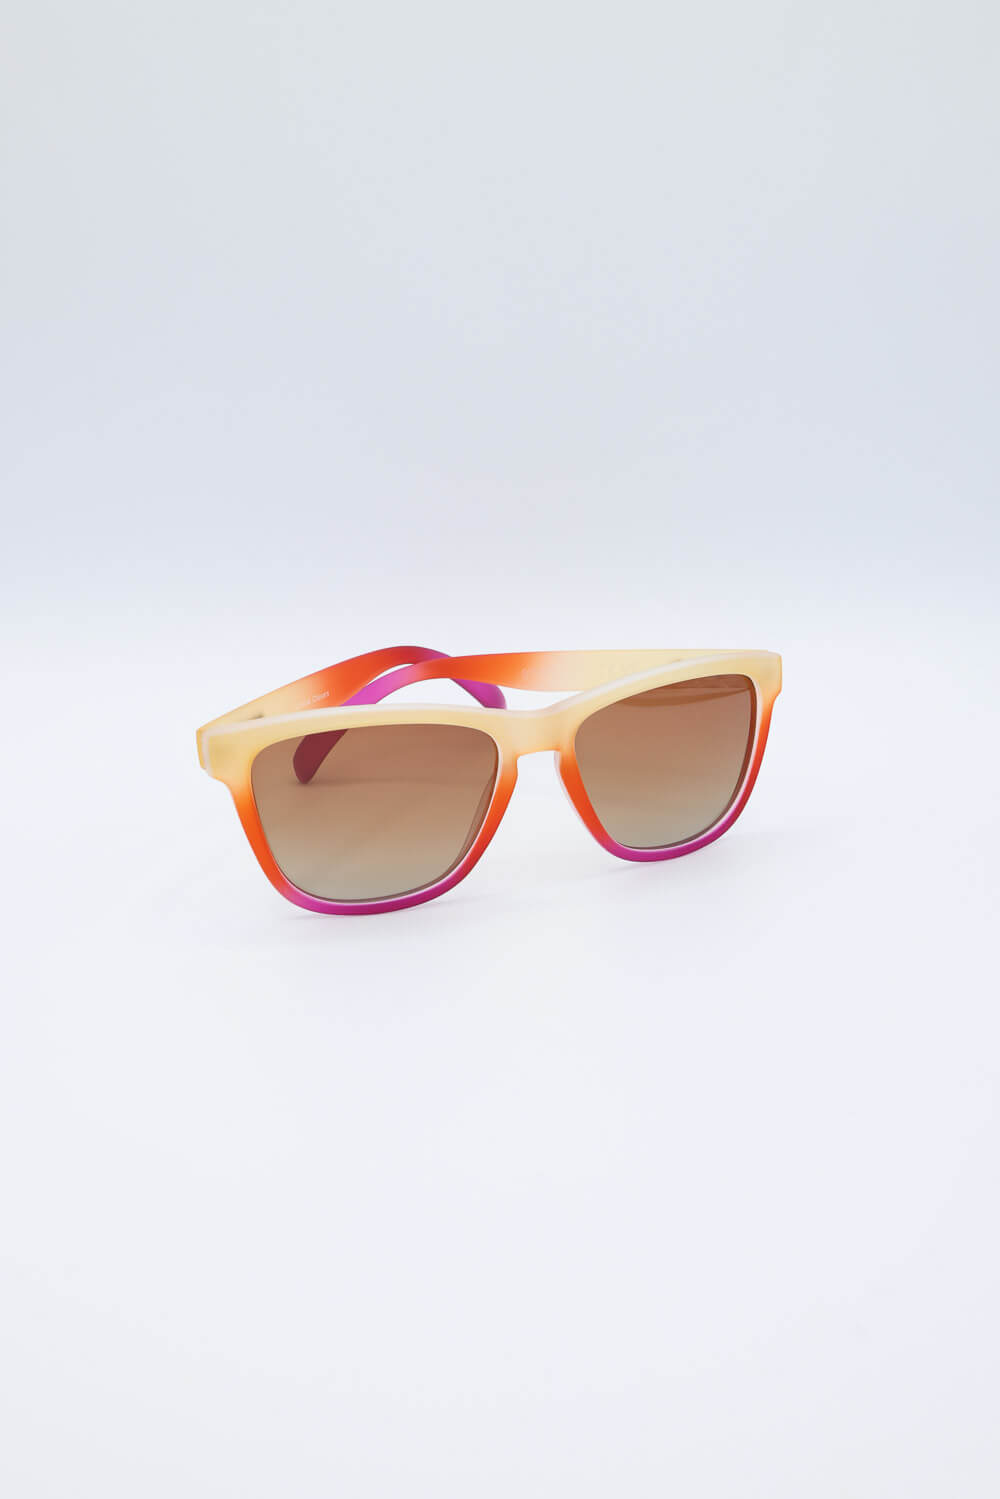 The Void Sunglasses Australia